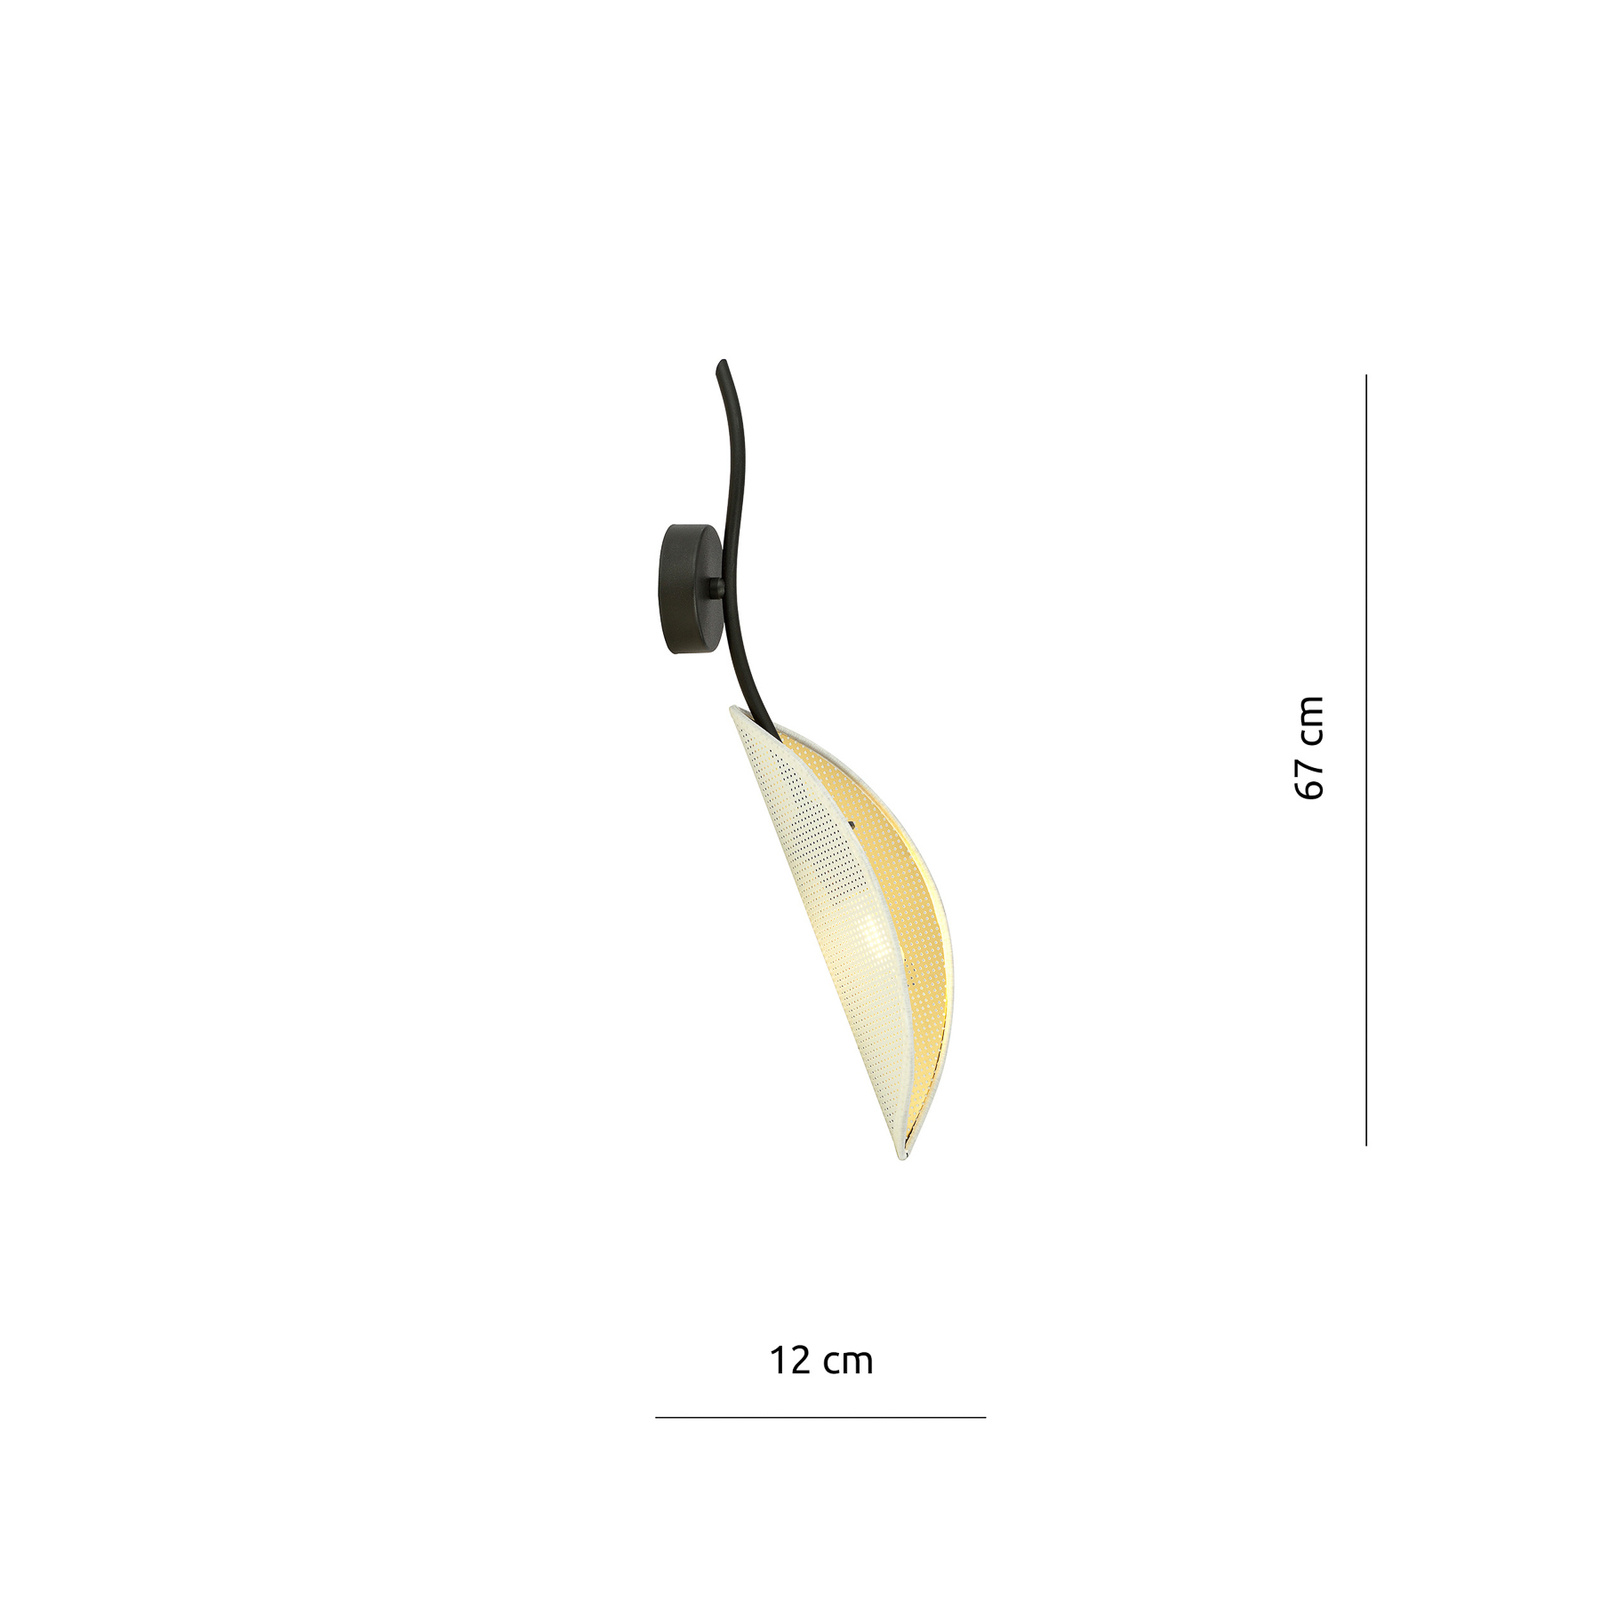 Wandlampe Lotus, schwarz/weiß/gold, 1-flammig